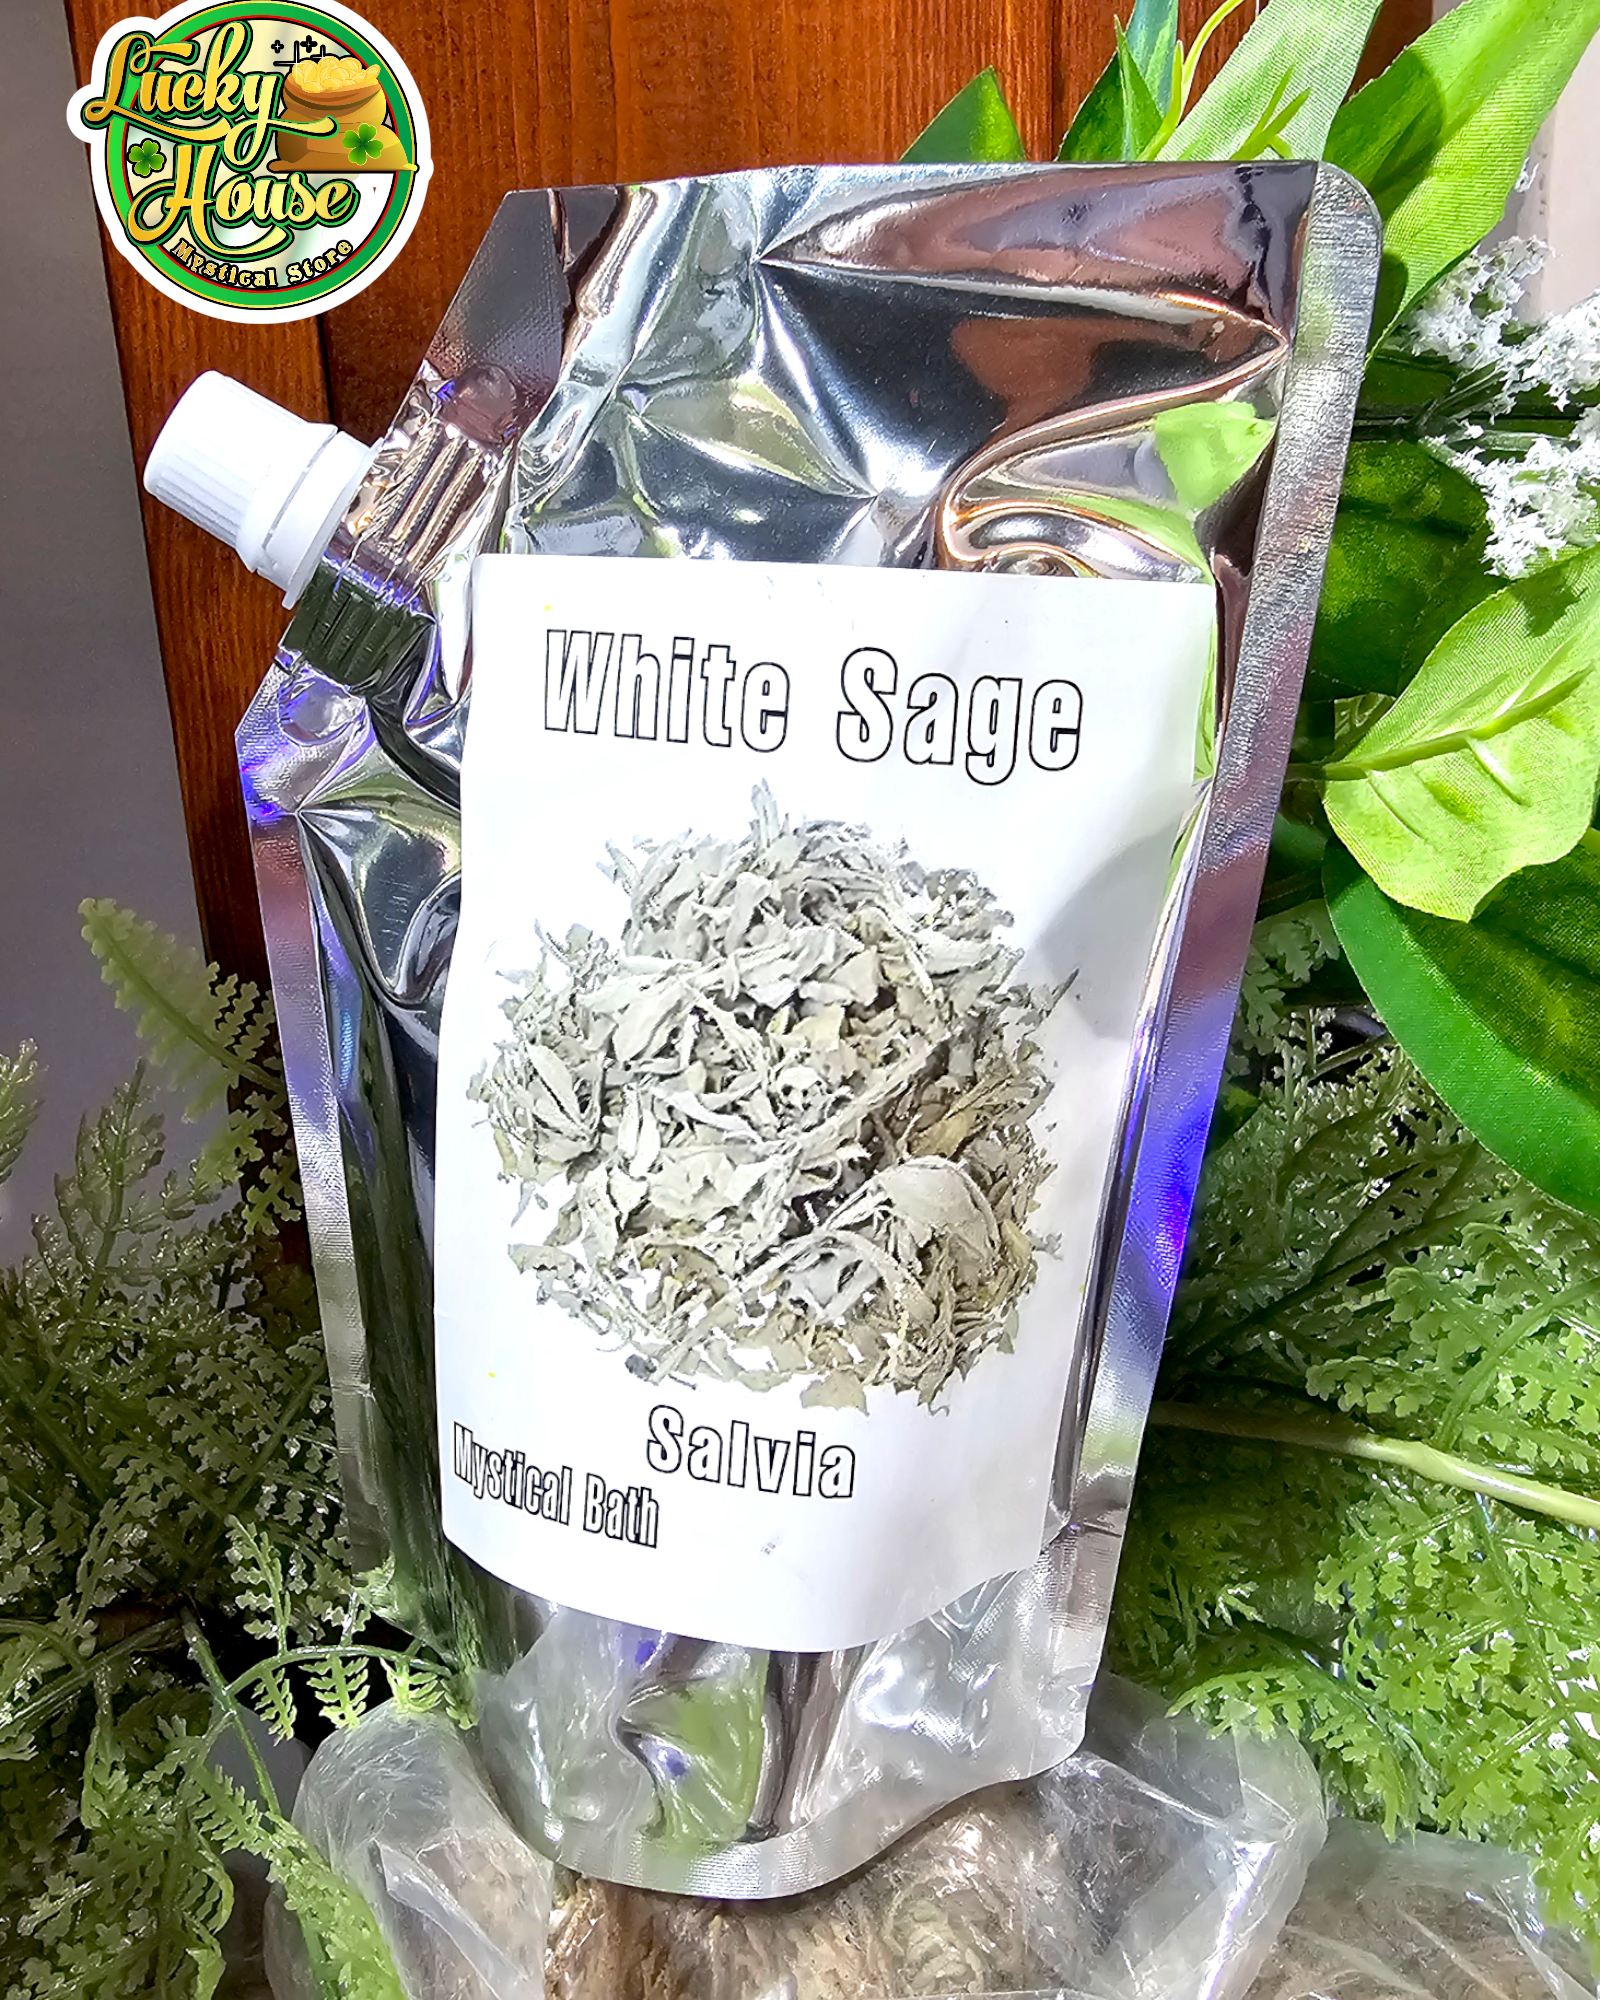 White Sage Bath